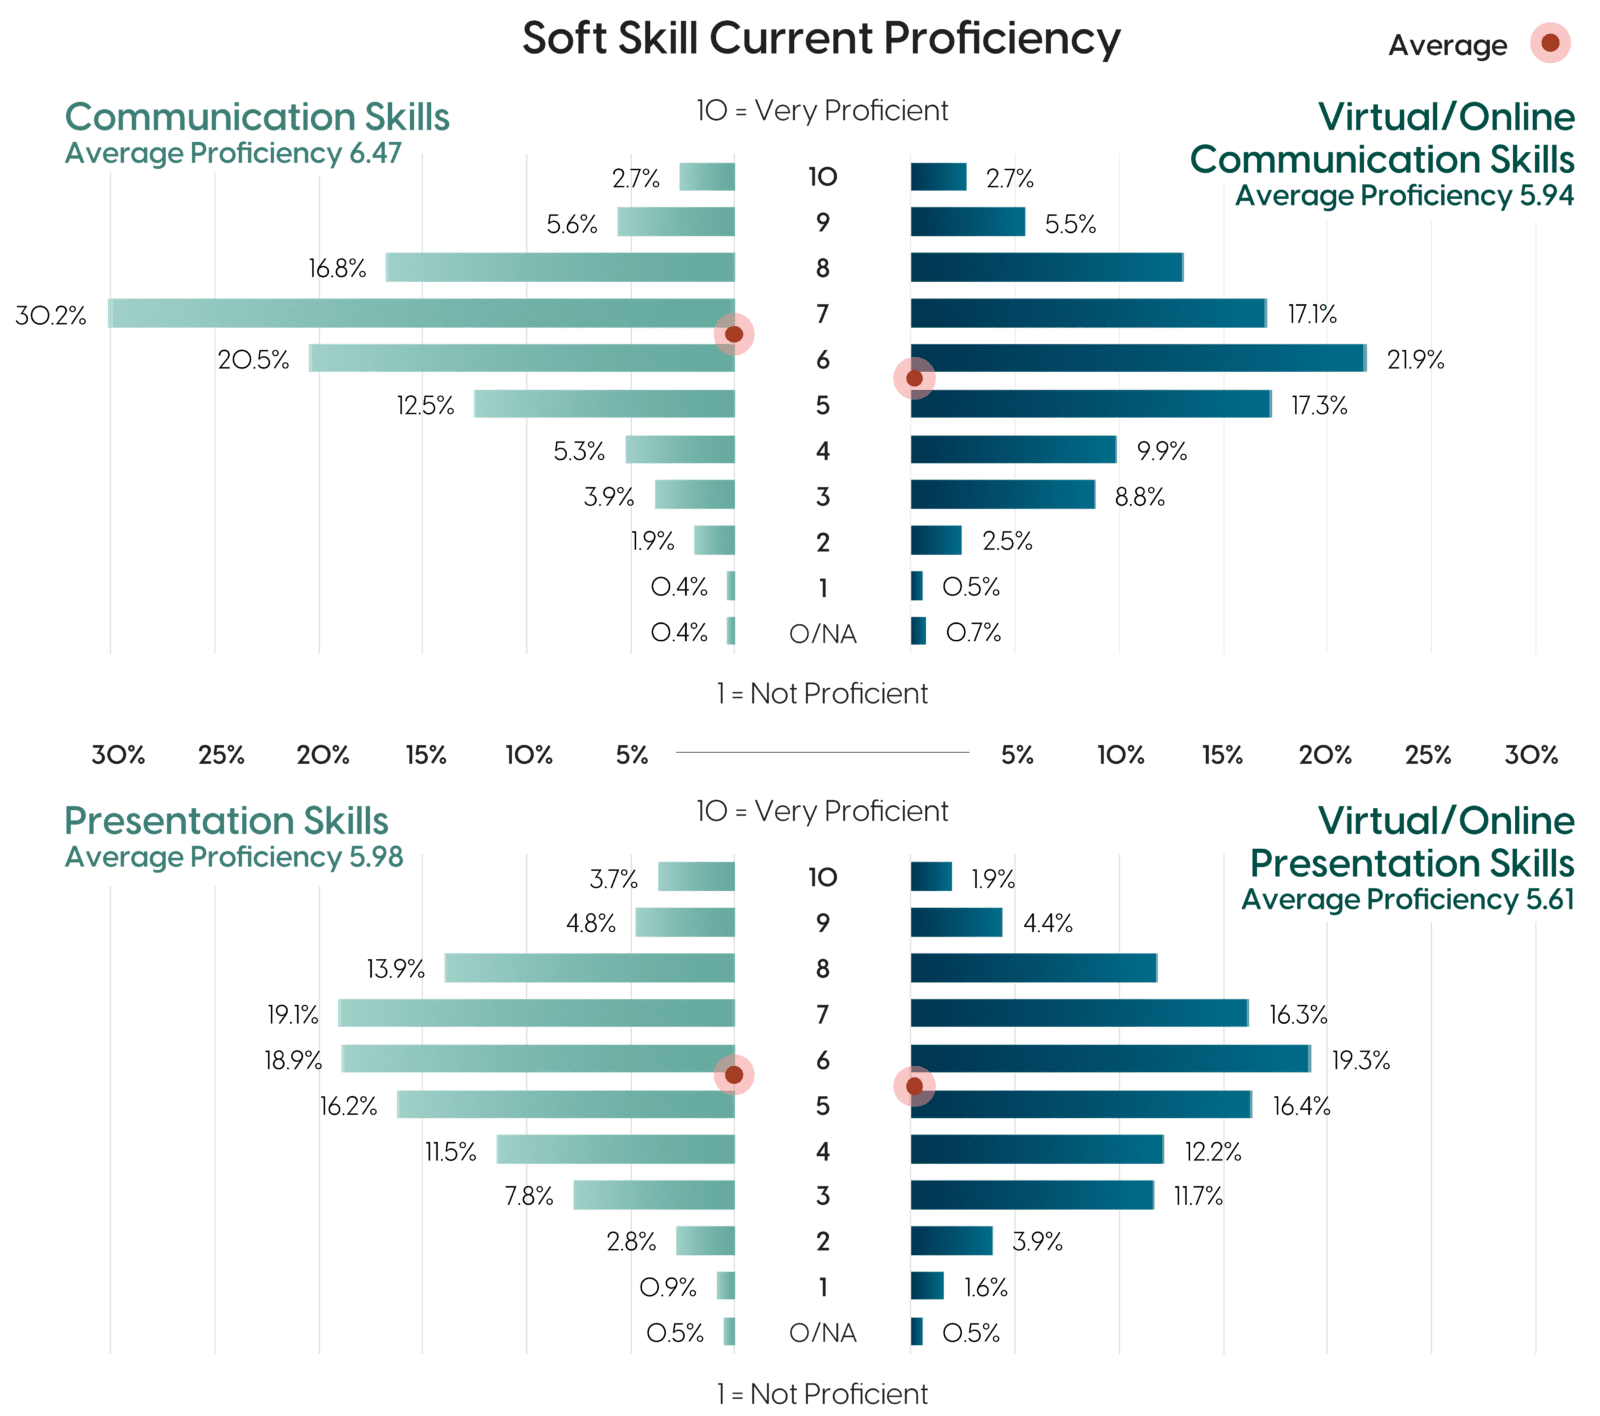 Soft Skill Current Proficiency data